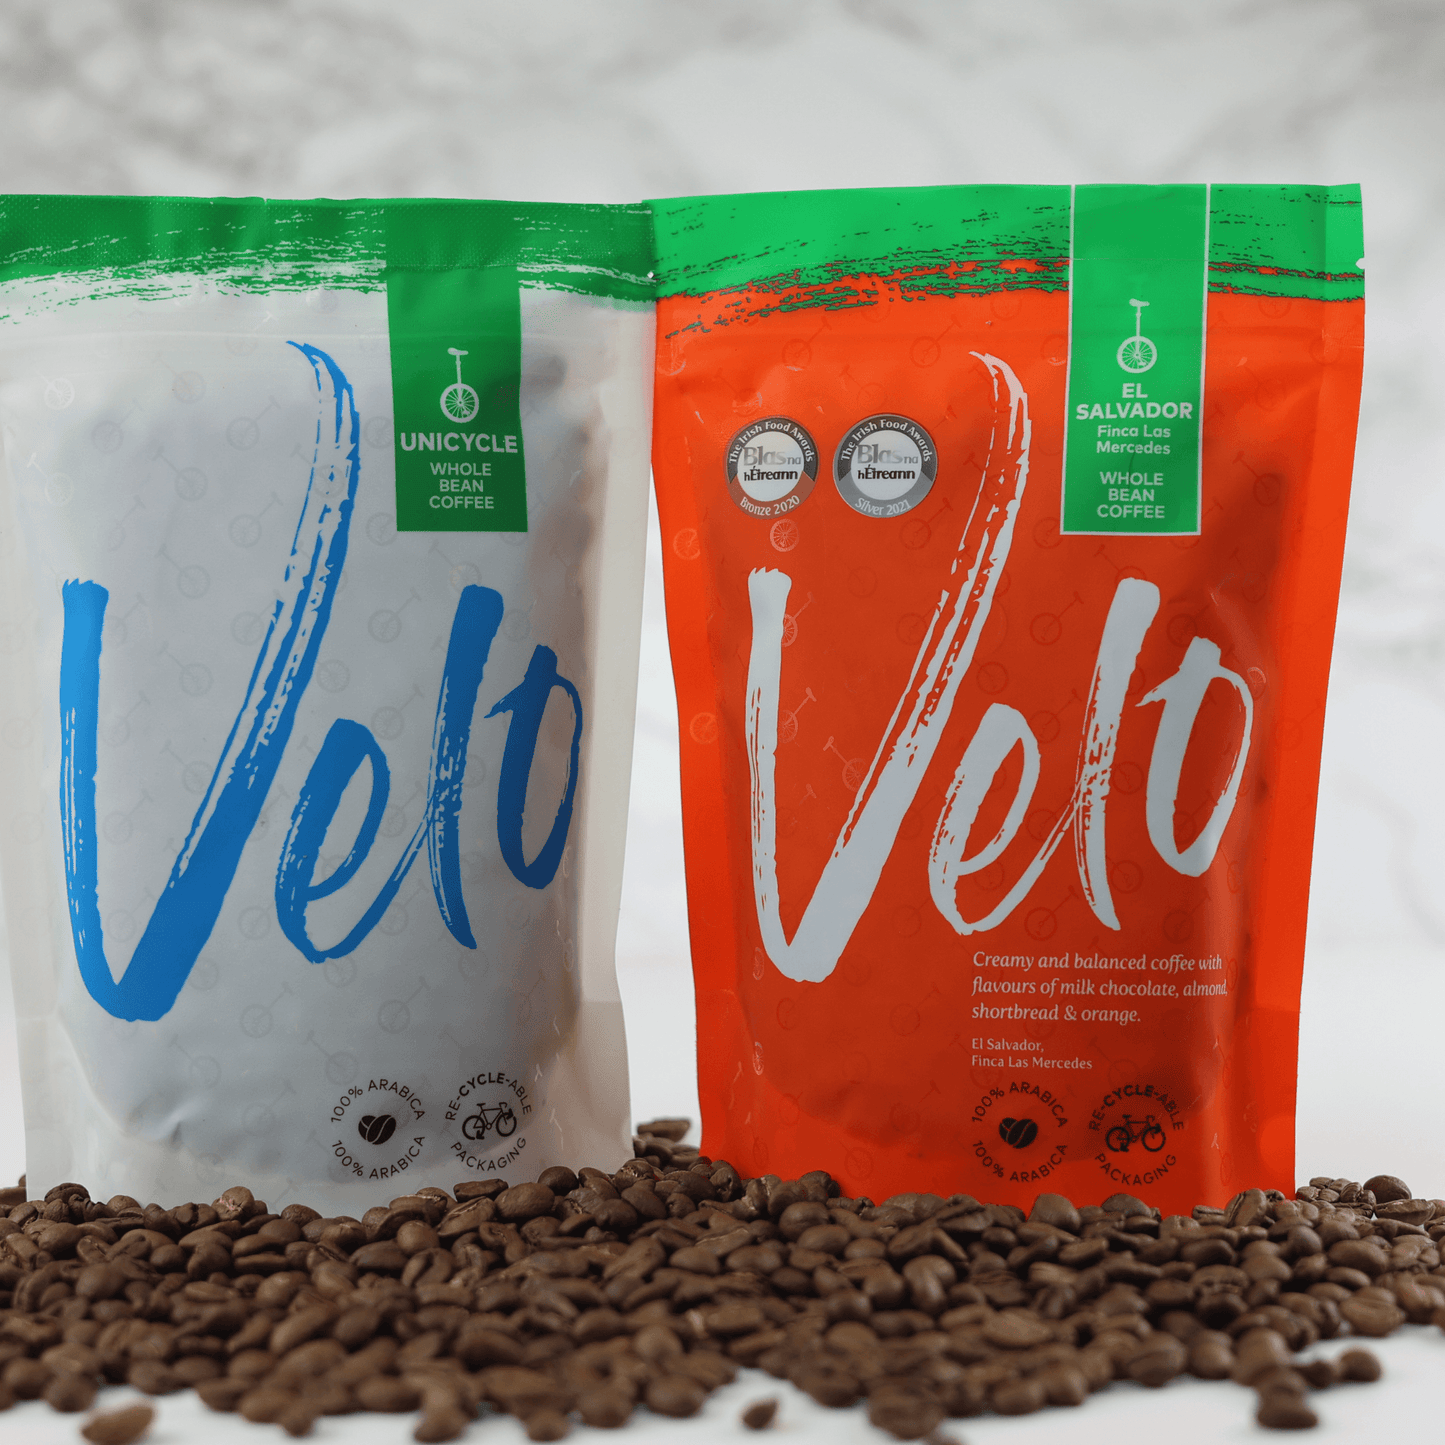 Yellow Jersey 200g and El Salvador 200g Coffee Bag Bundle - Velo Coffee Roasters